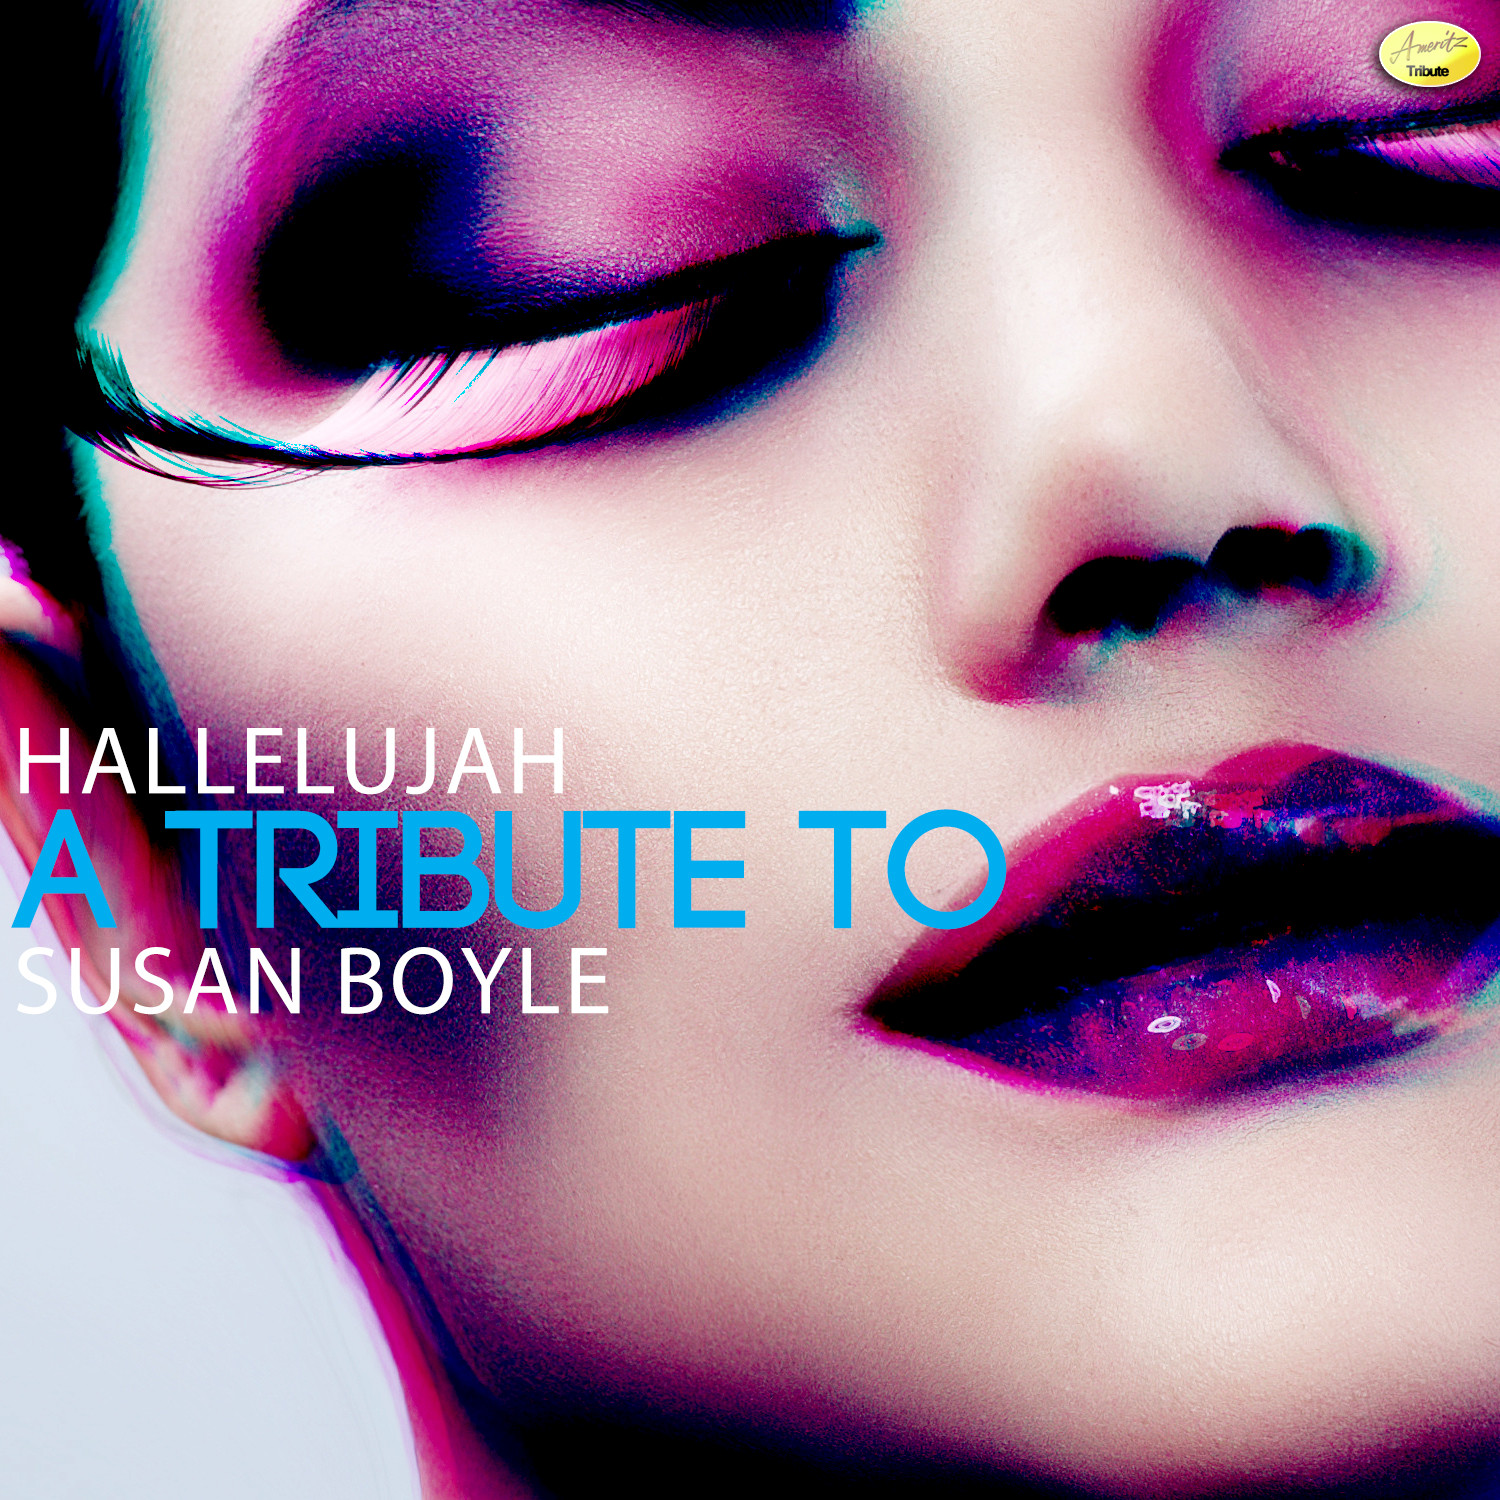 Hallelujah - A Tribute to Susan Boyle